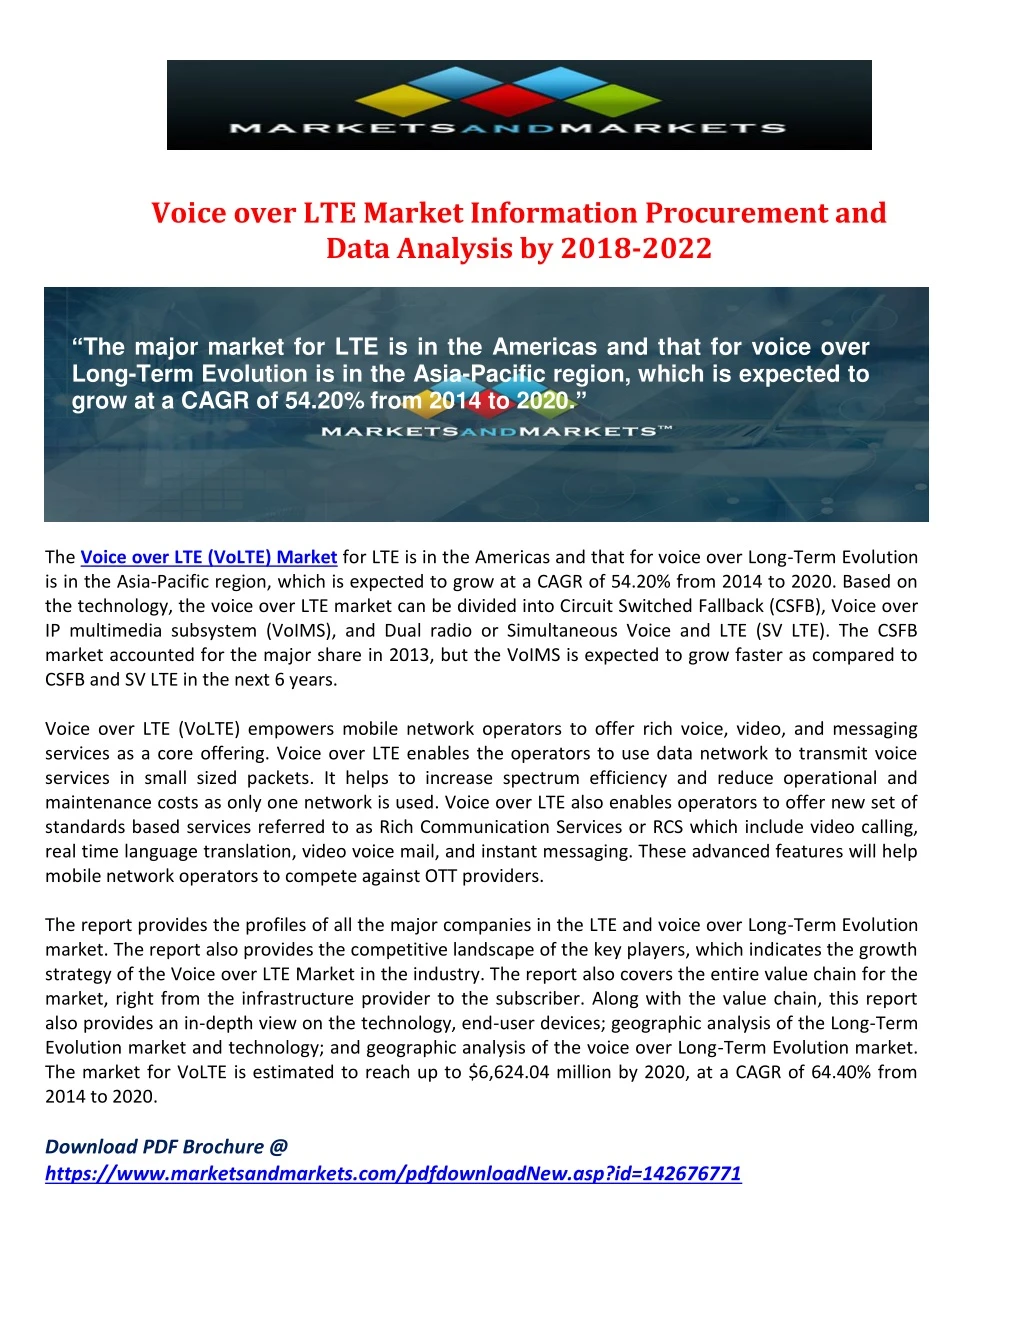 voice over lte market information procurement